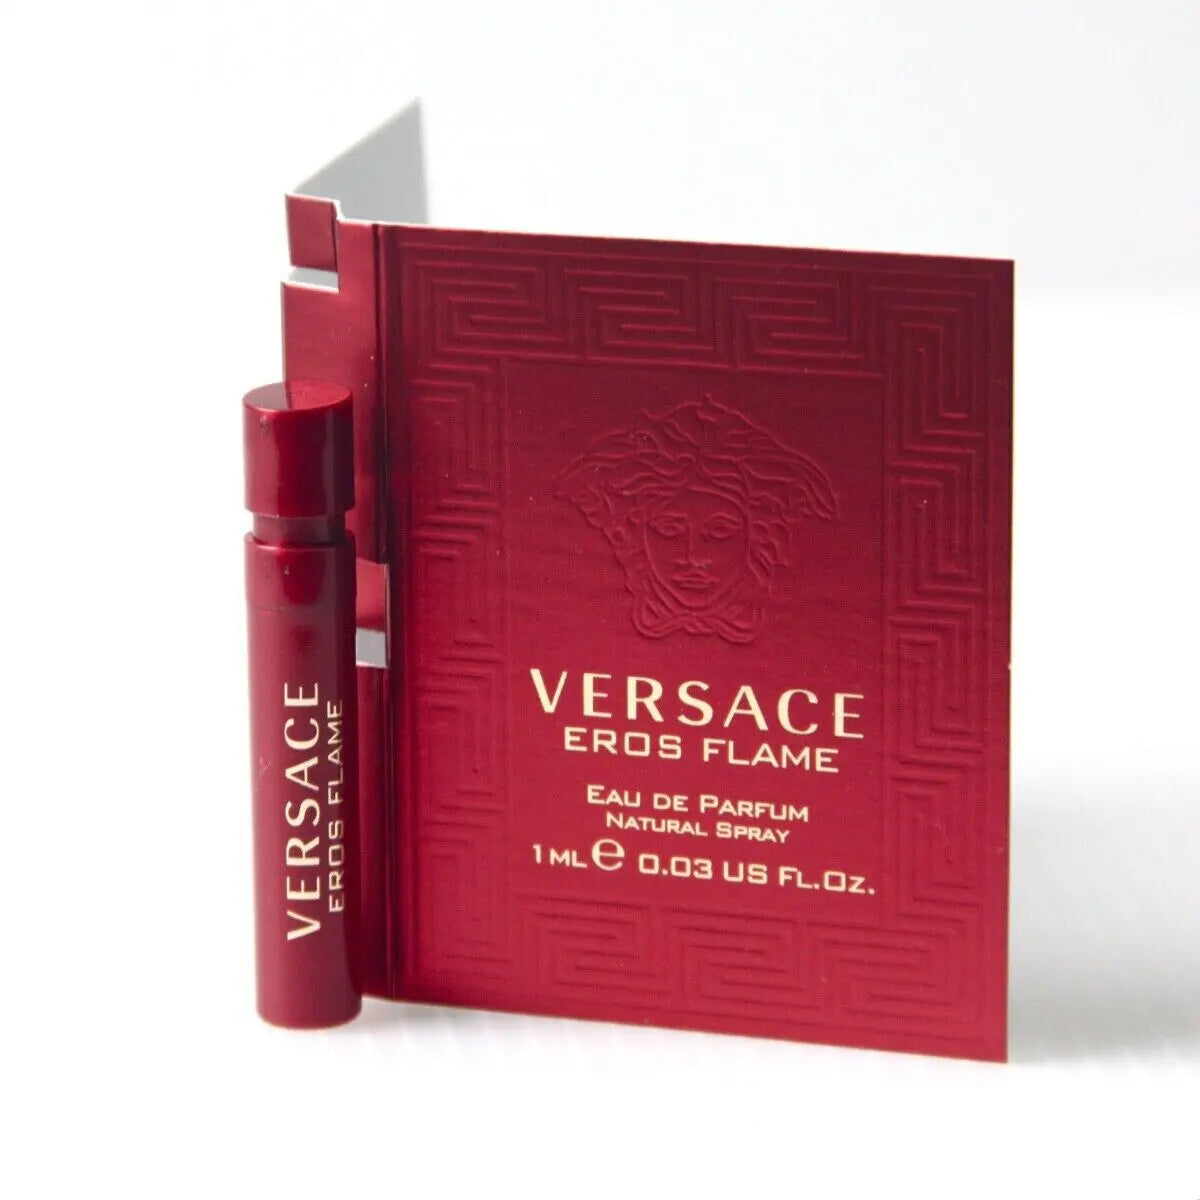 Versace Eros Flame EDP Sample 1ml Male